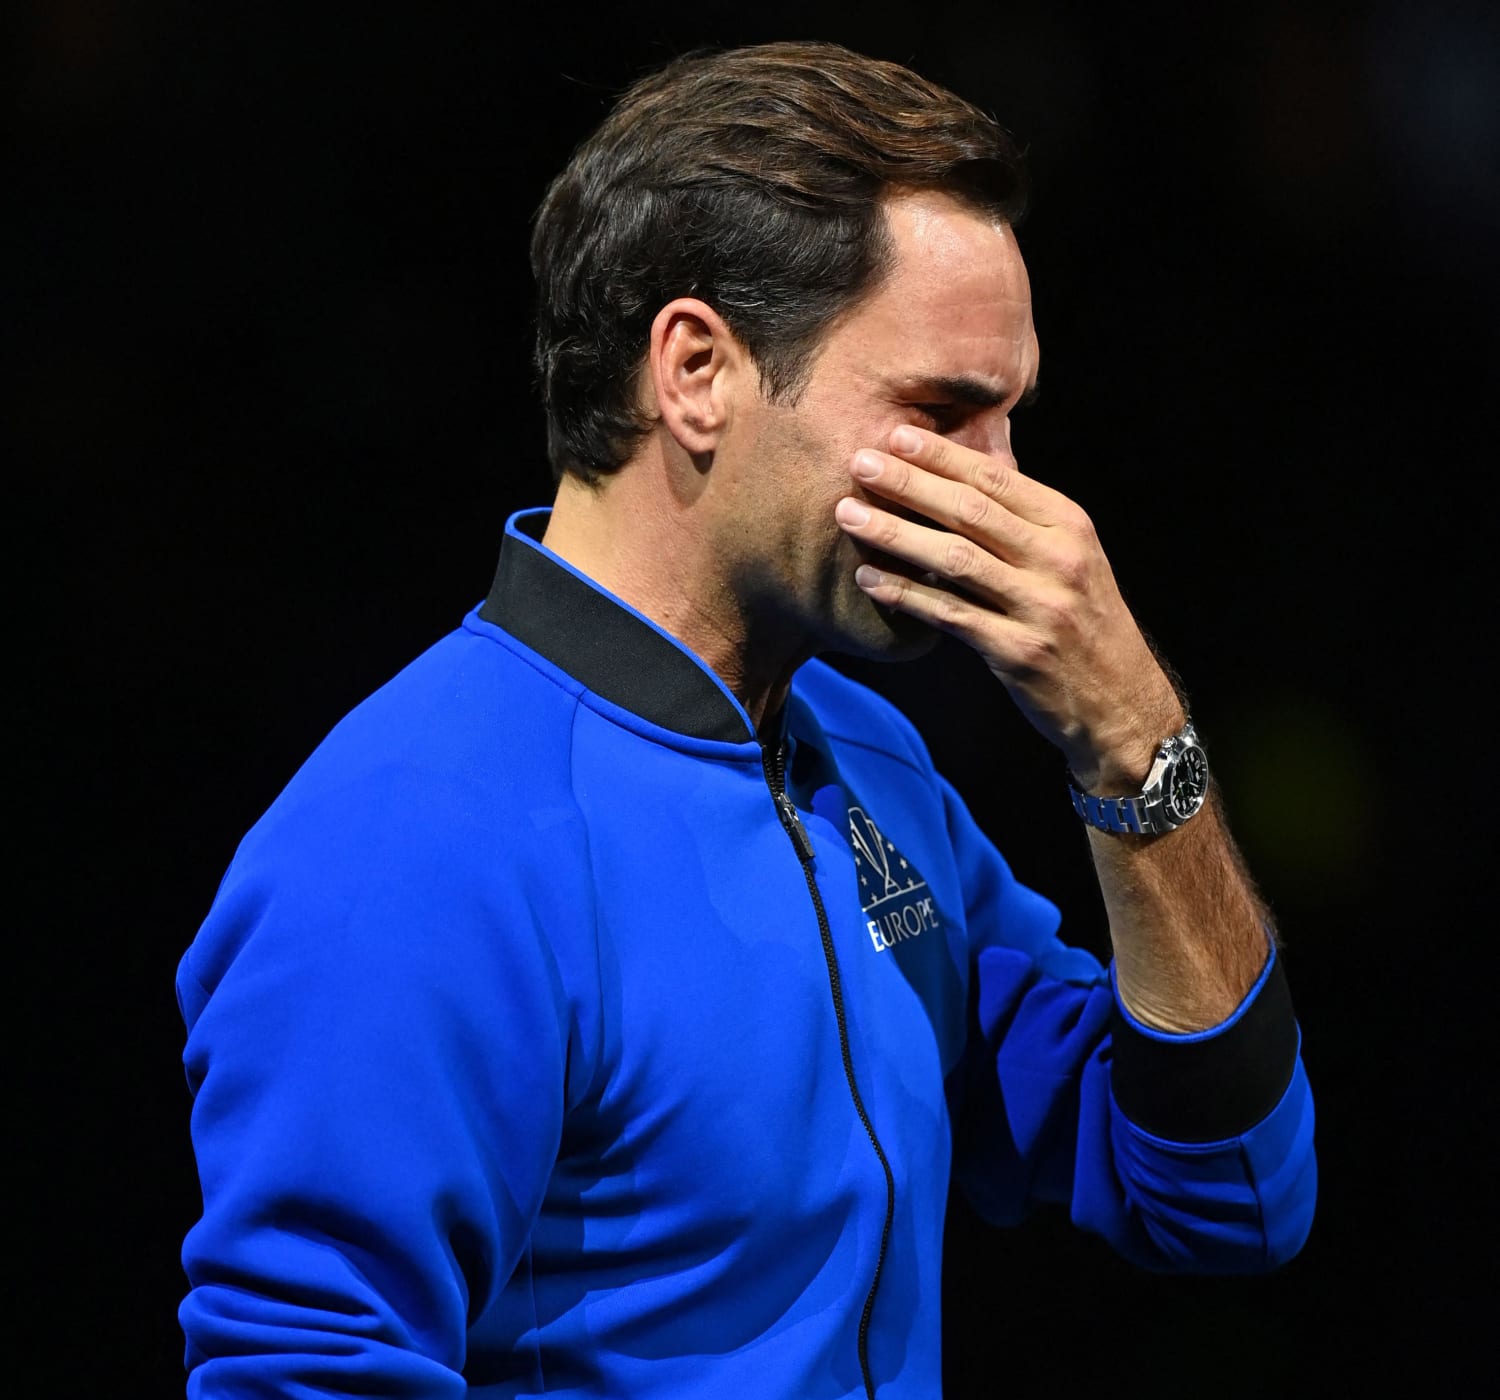 Roger Federer tears up after his final pro tennis match